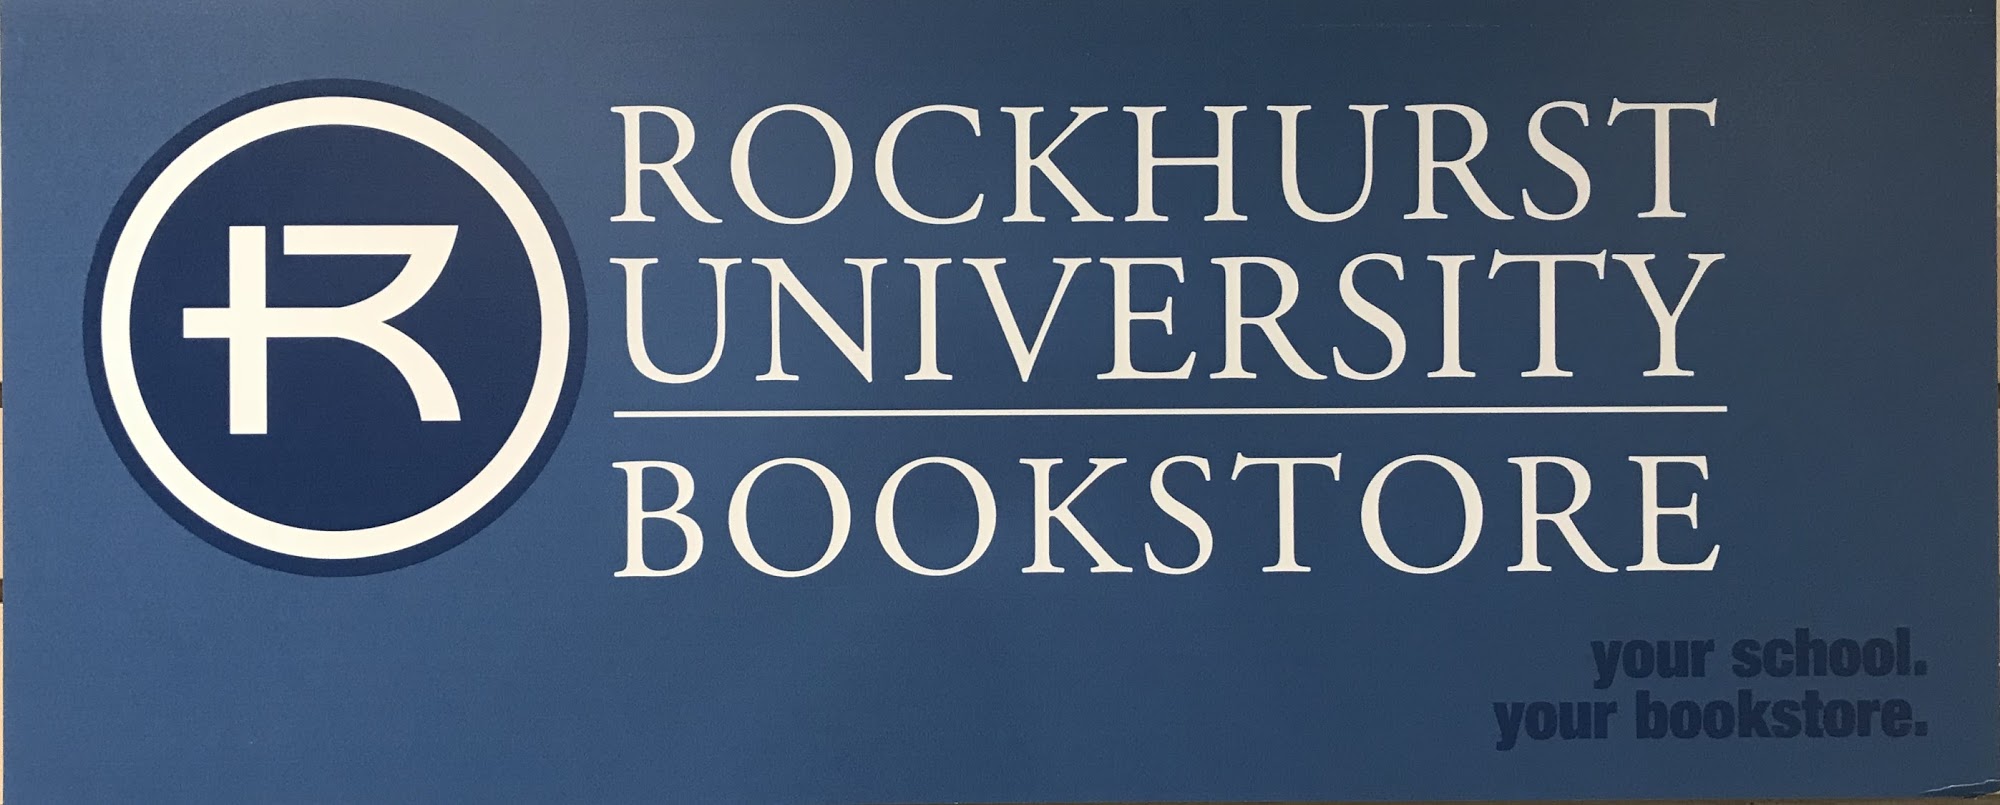 Rockhurst University Bookstore